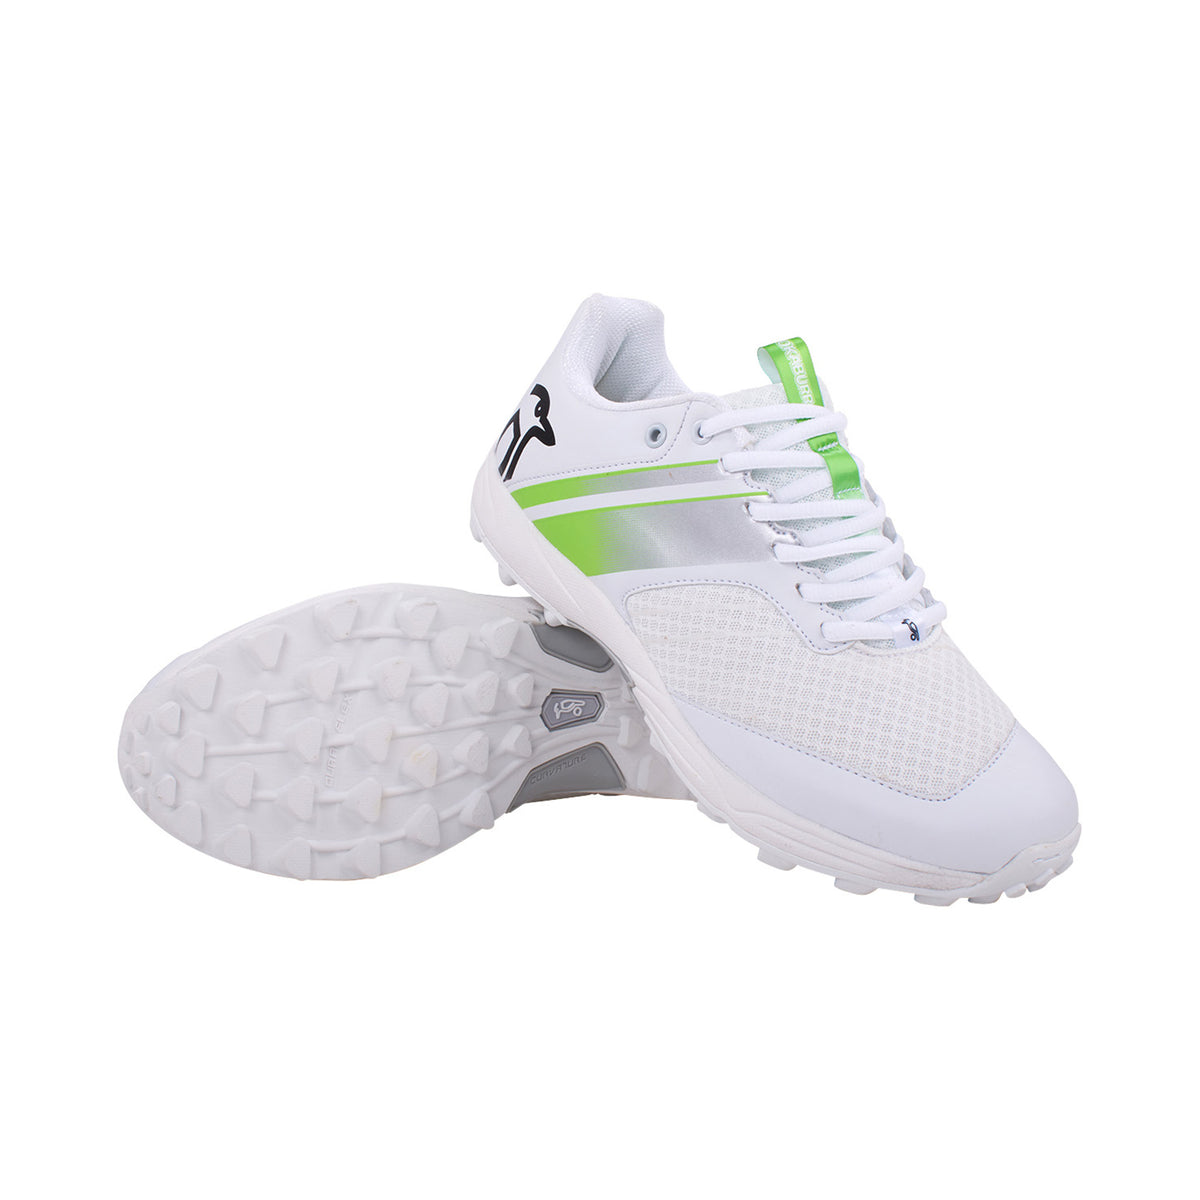 Kookaburra KC 3.0 Rubber Junior Cricket Shoes: White/Lime